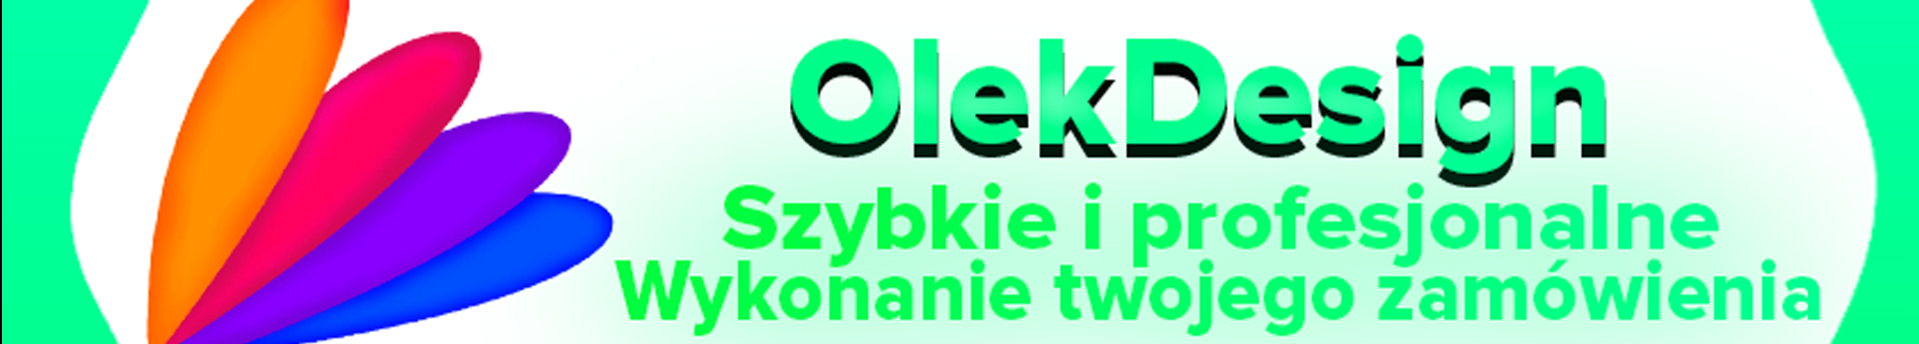 Banner de perfil de Olek Design